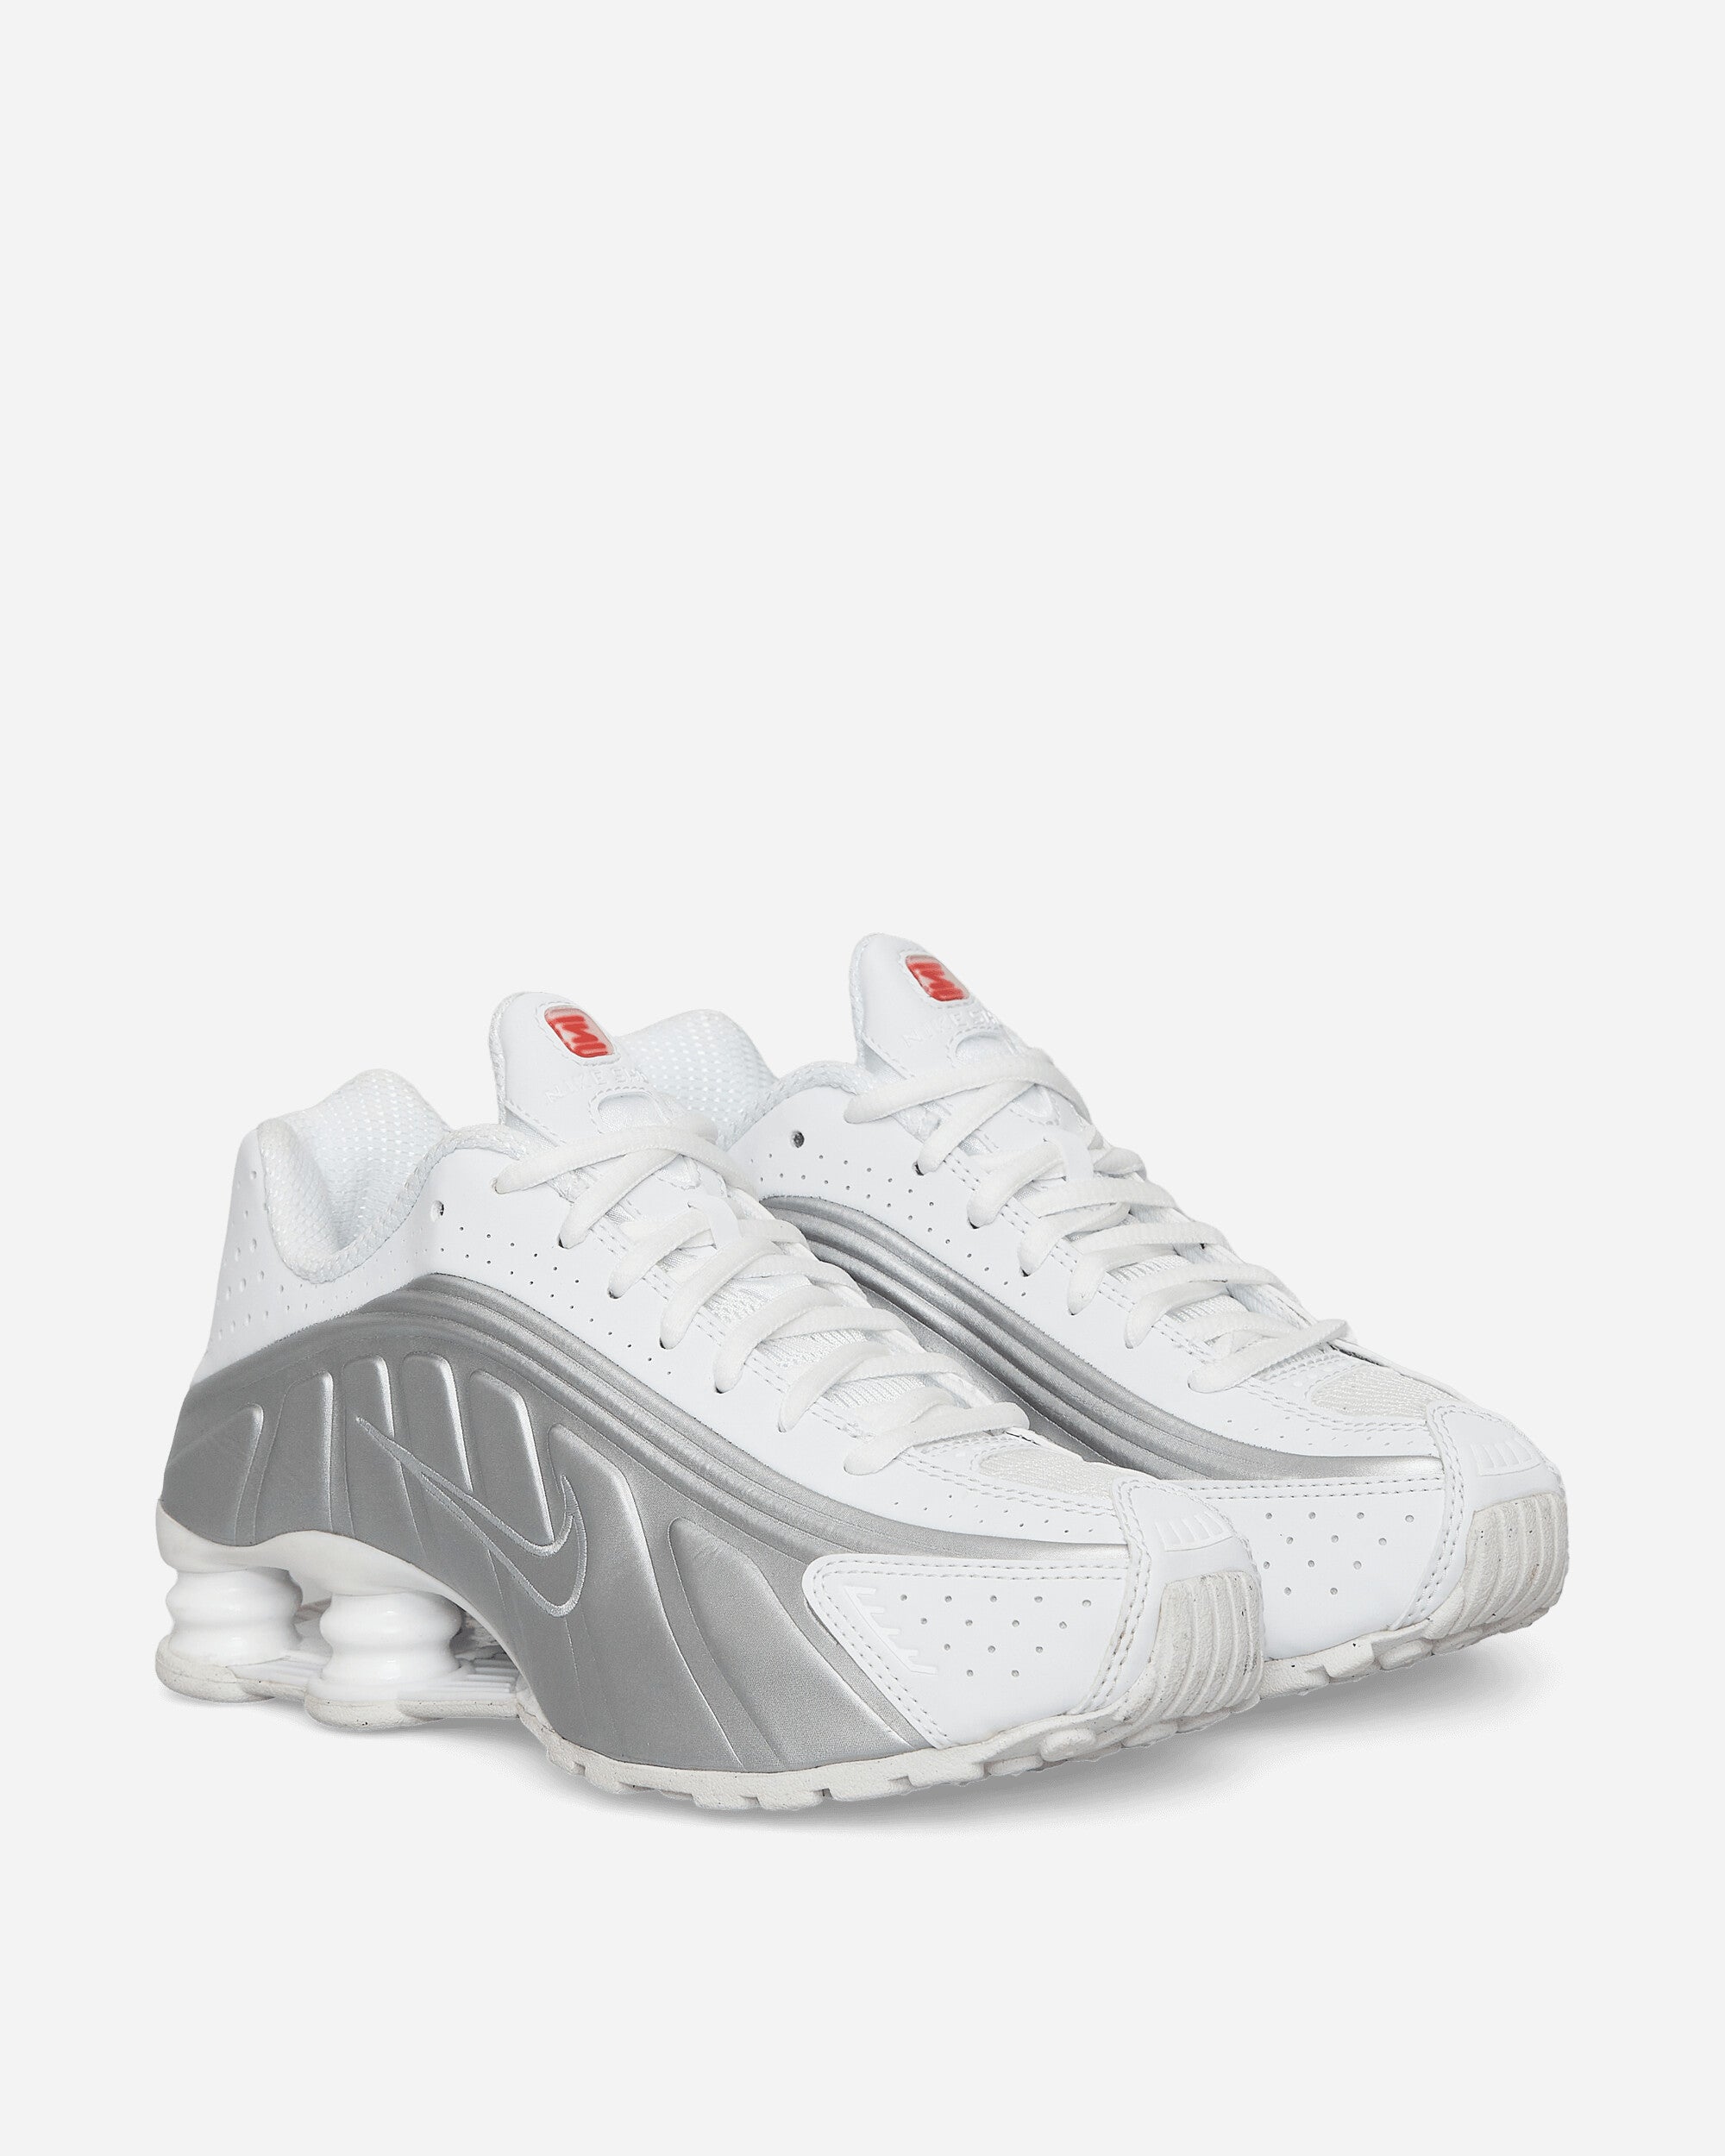 Shox R4 Sneakers White